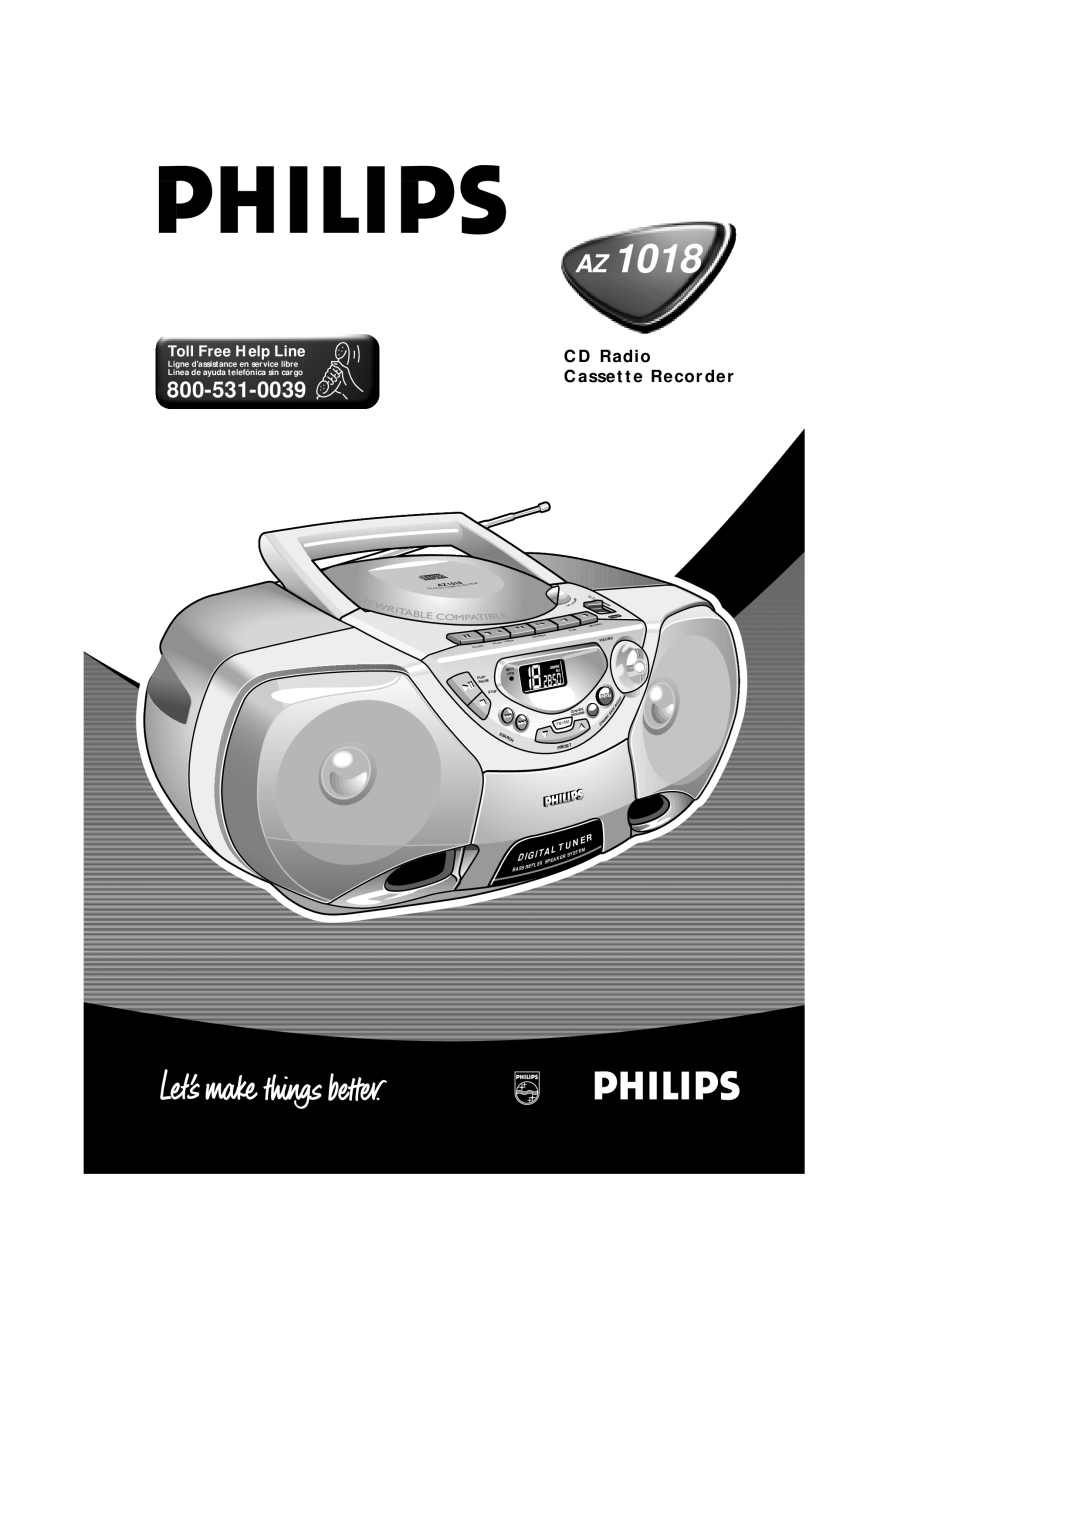 Philips AZ 1018 manual CD Radio Cassette Recorder, Toll Free Help Line, Igit, Search Preset, Fmam, Ker S, S Re 